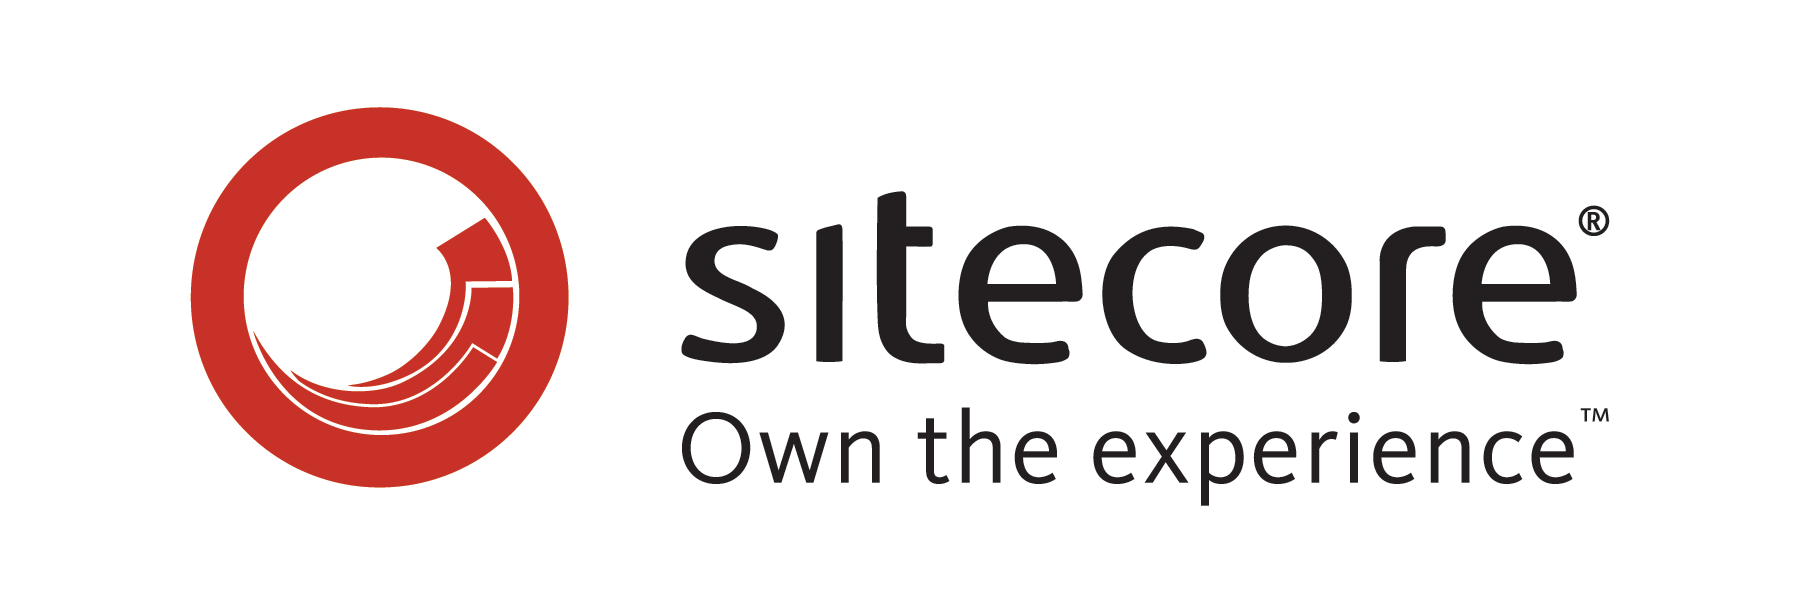 Joining Sitecore!